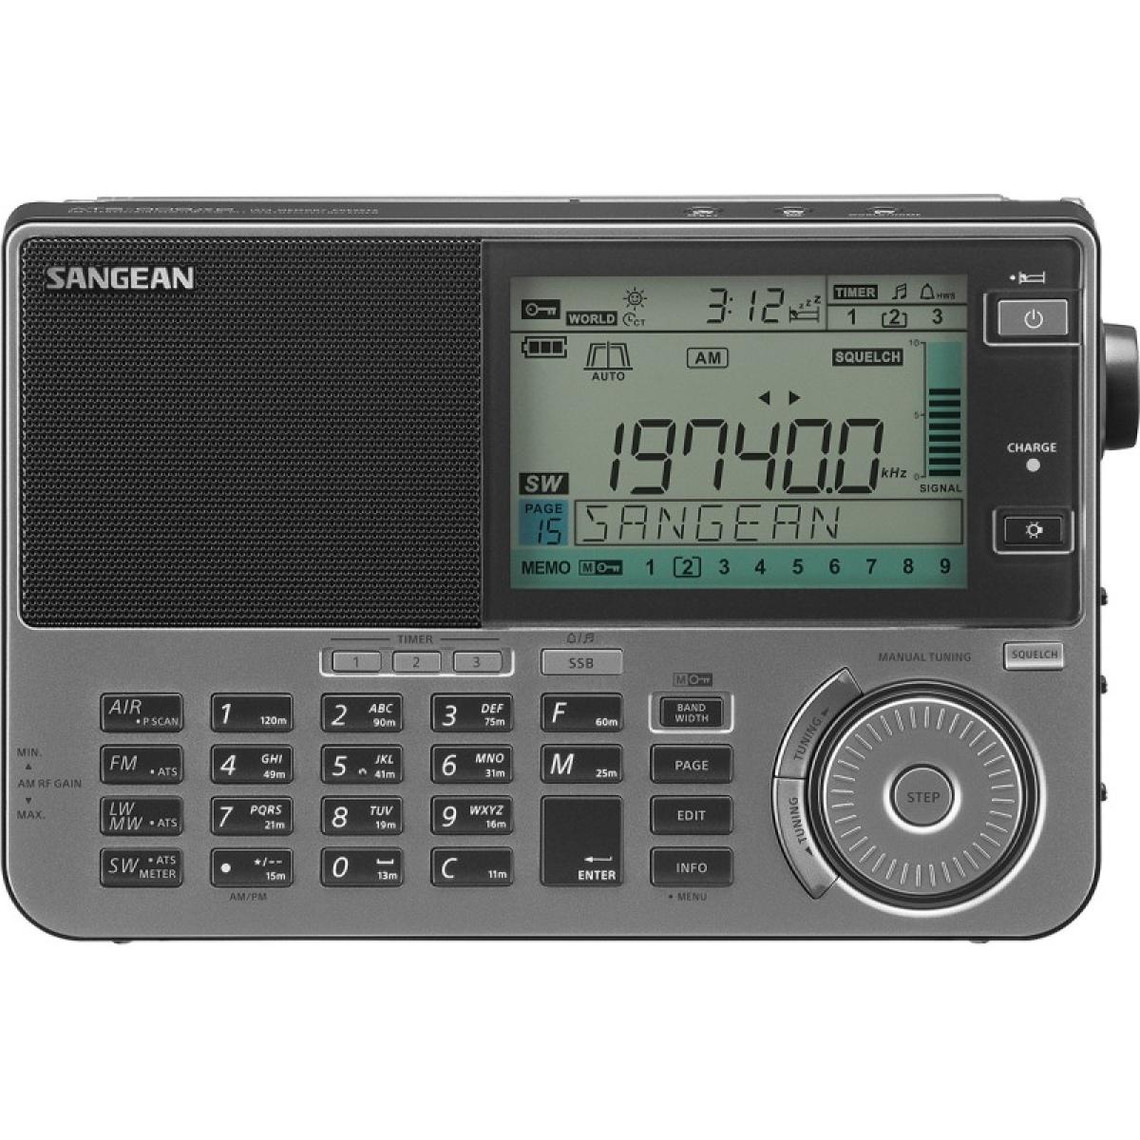 Radio Sangean SANGEAN - DISCOVER 909X2 (ATS-909 X2)